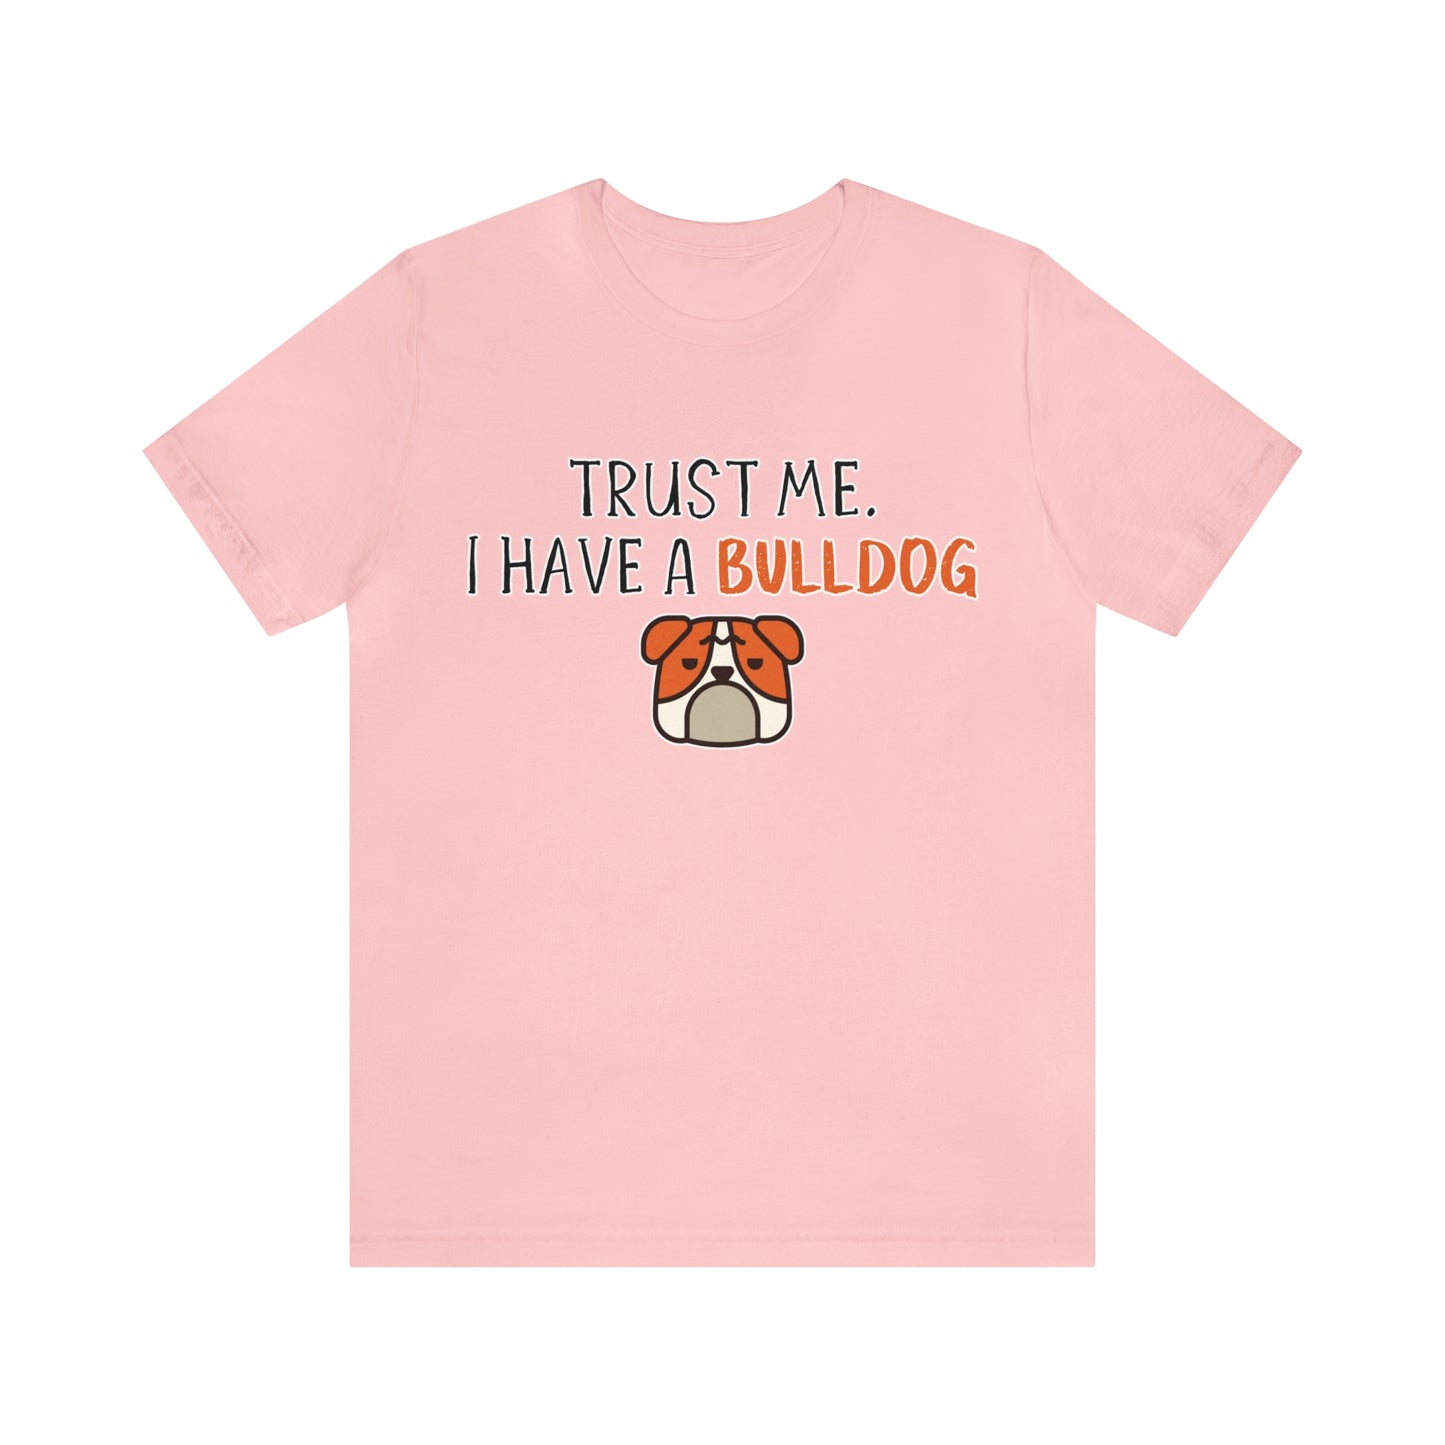 bulldog shirt pink